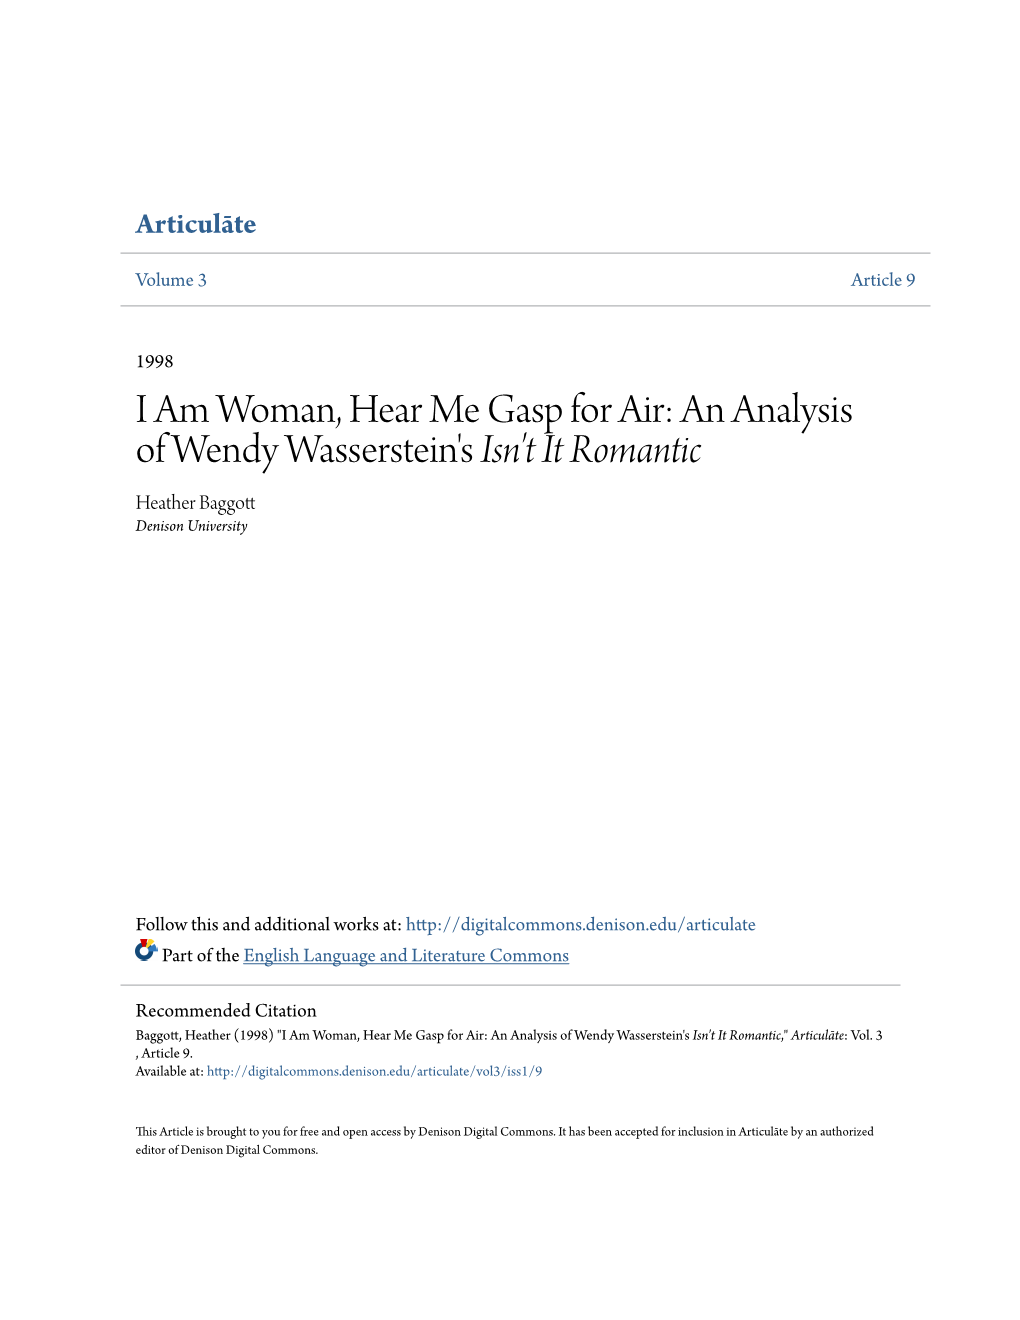 An Analysis of Wendy Wasserstein's Isn't It Romantic Heather Baggott Denison University